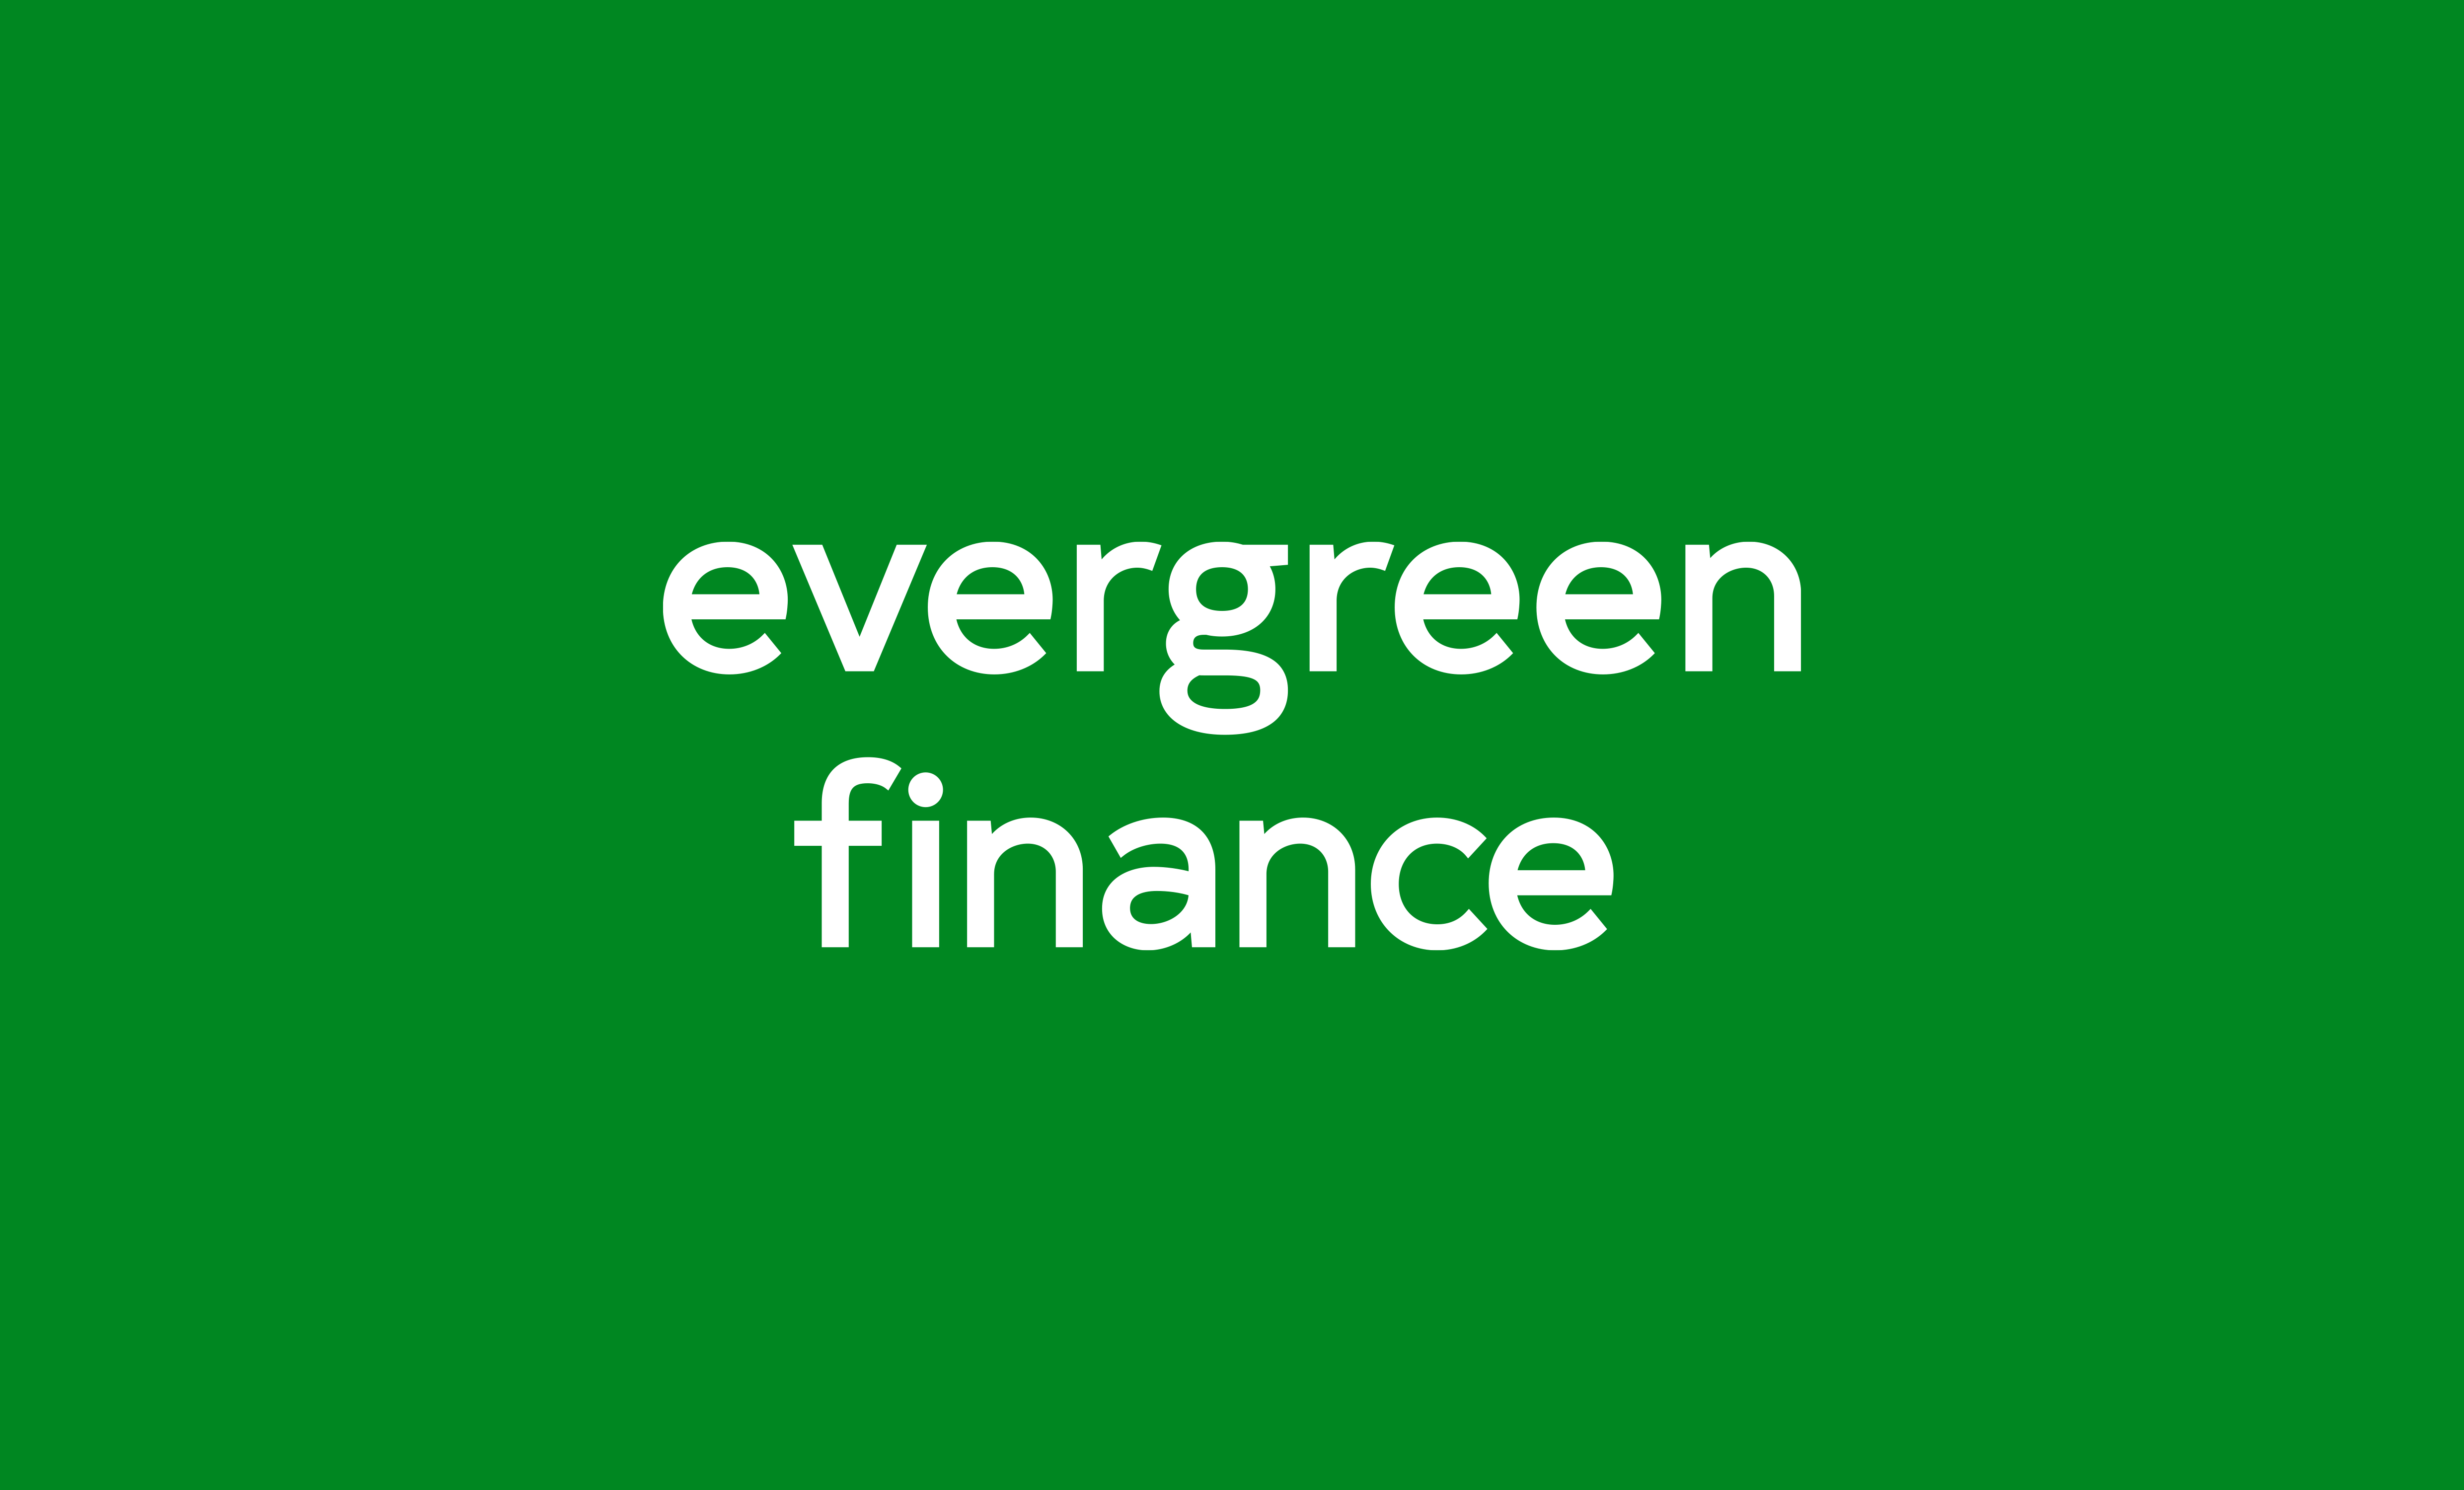 Evergreen Finance London is forever grateful for Postworks